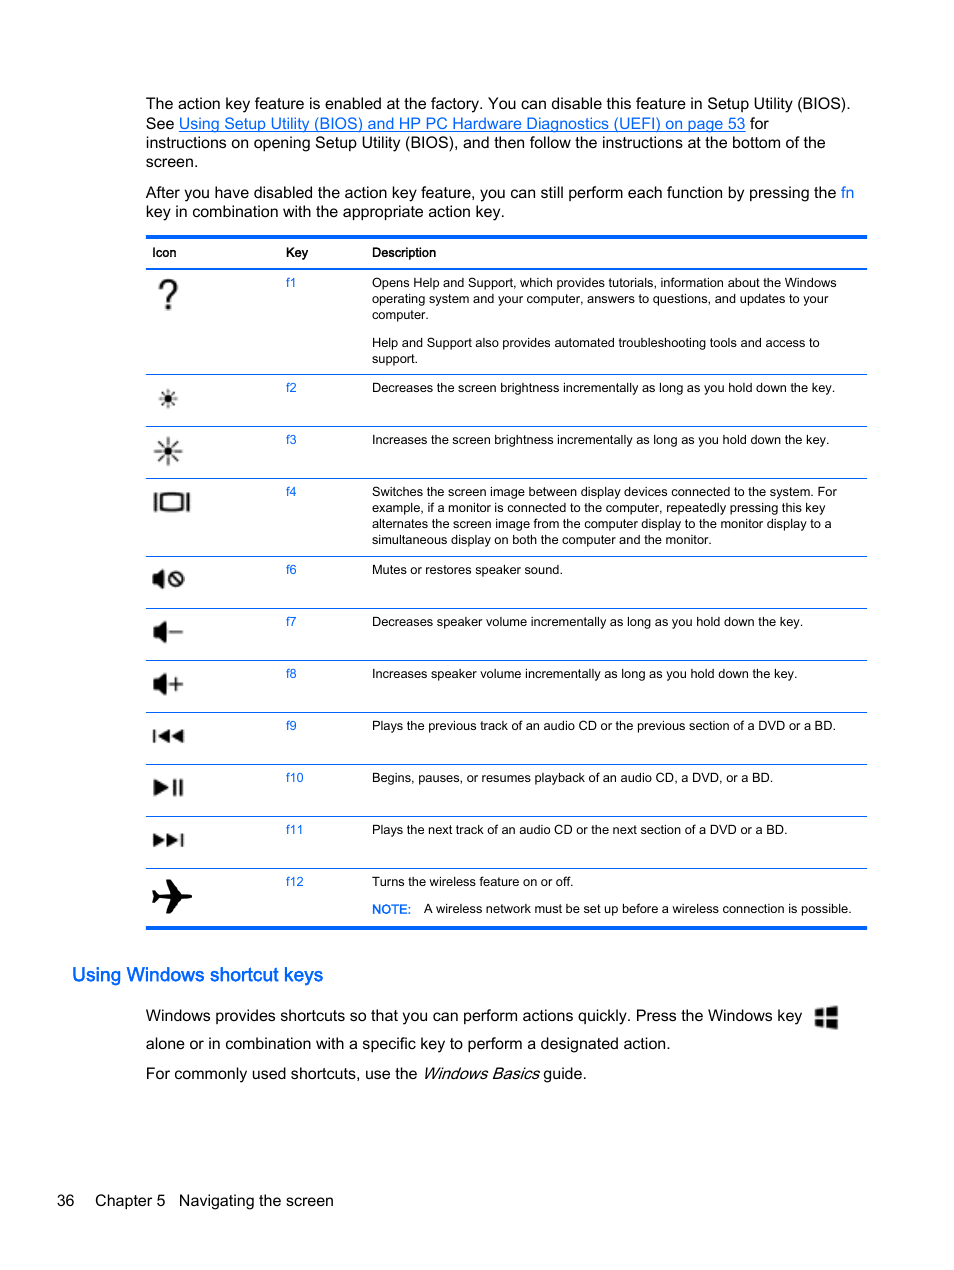 Using windows shortcut keys | HP x360 310 G1 Convertible PC User Manual